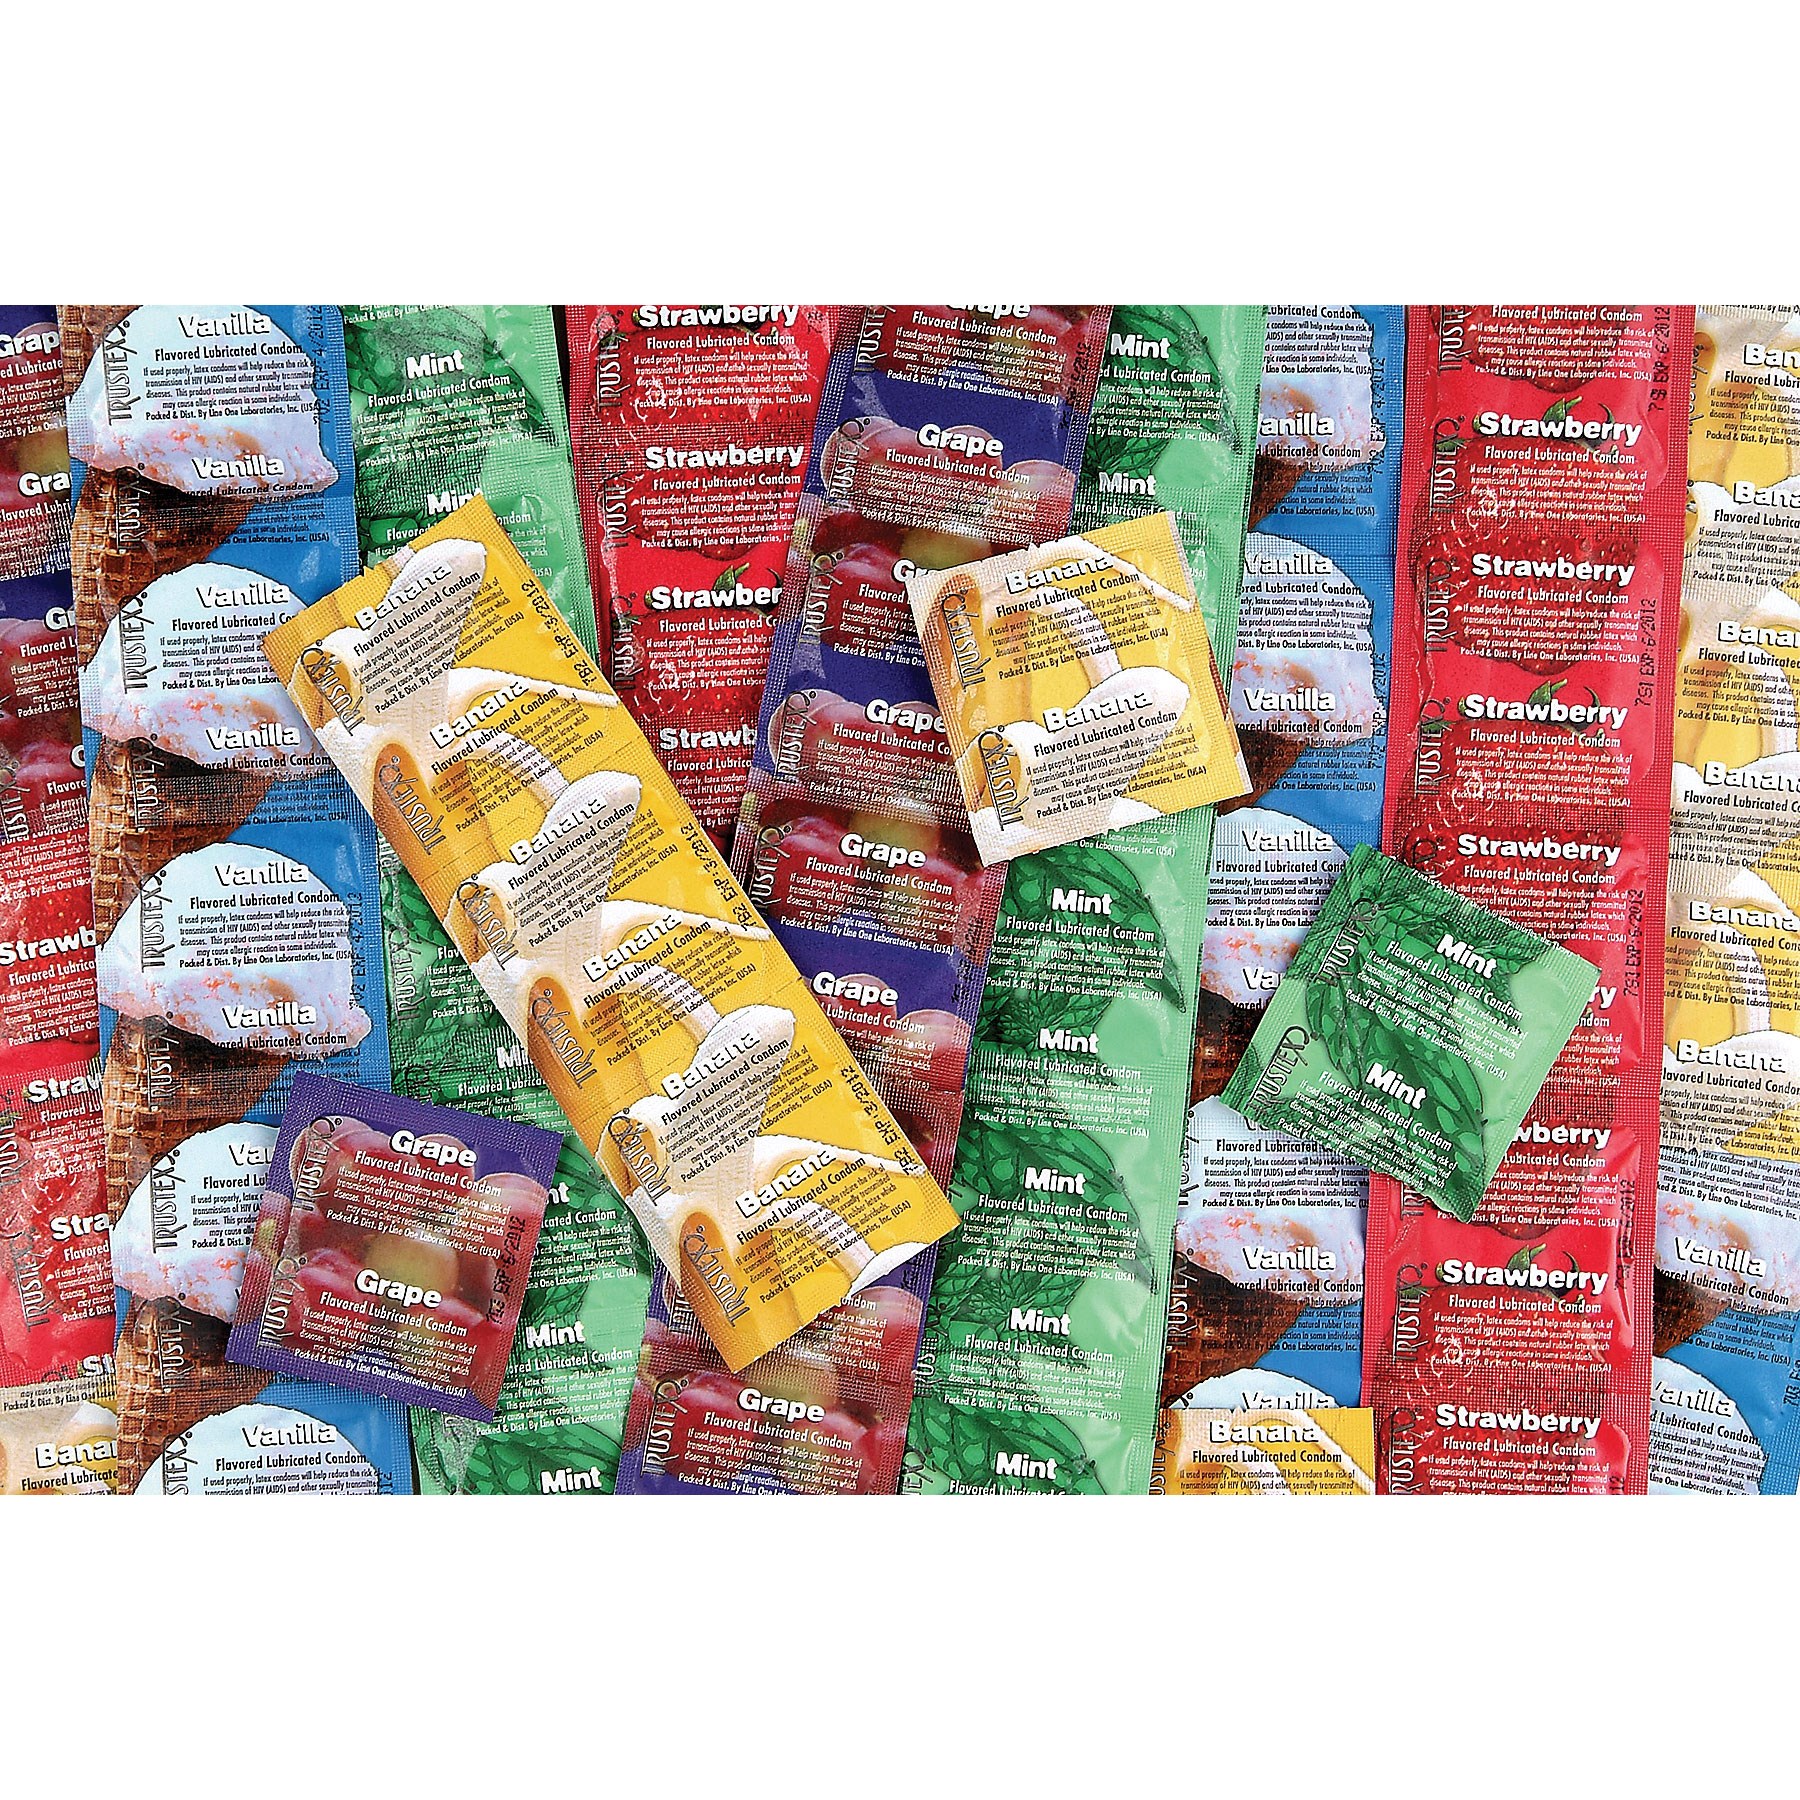 Flavored Condom Sampler 50-pack